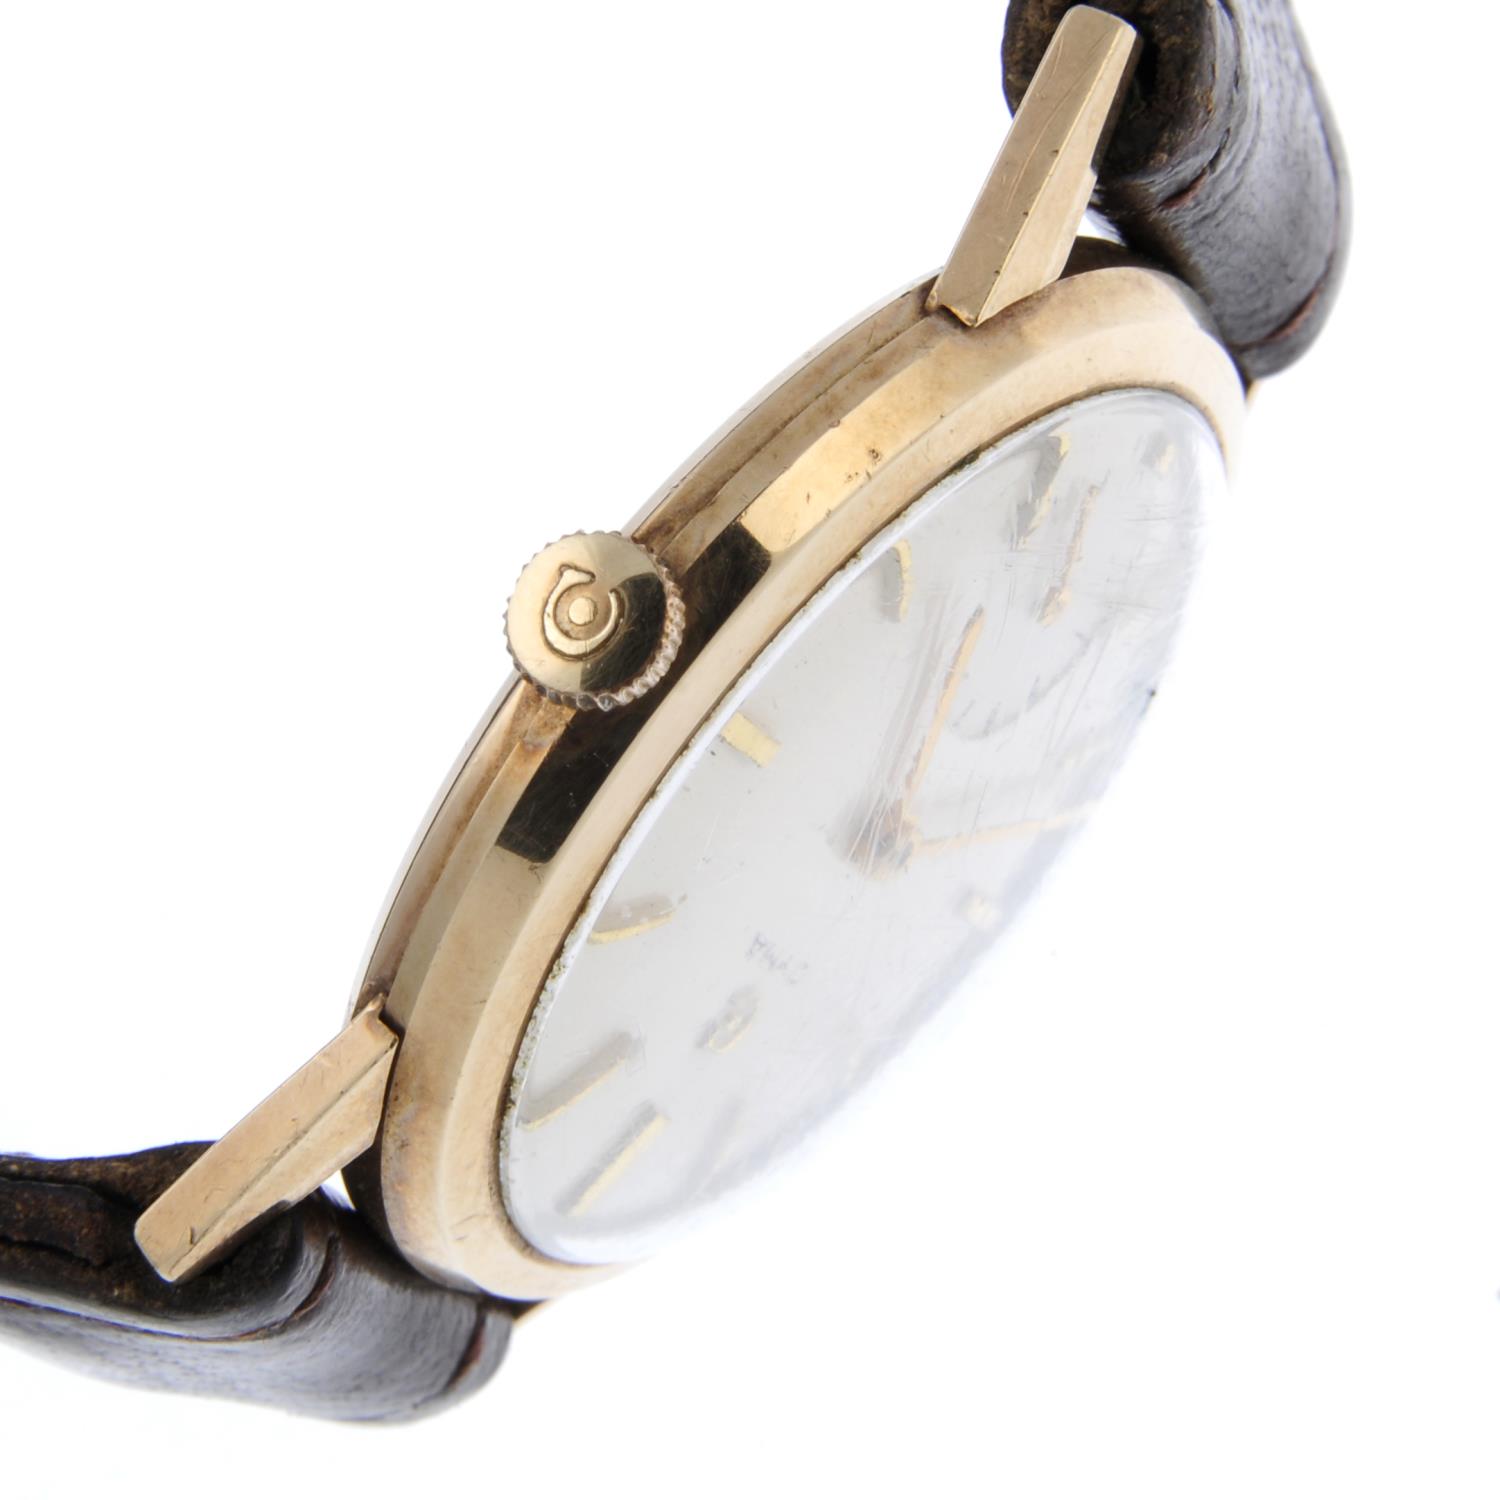 CYMA - a gentleman's wrist watch. - Image 4 of 4